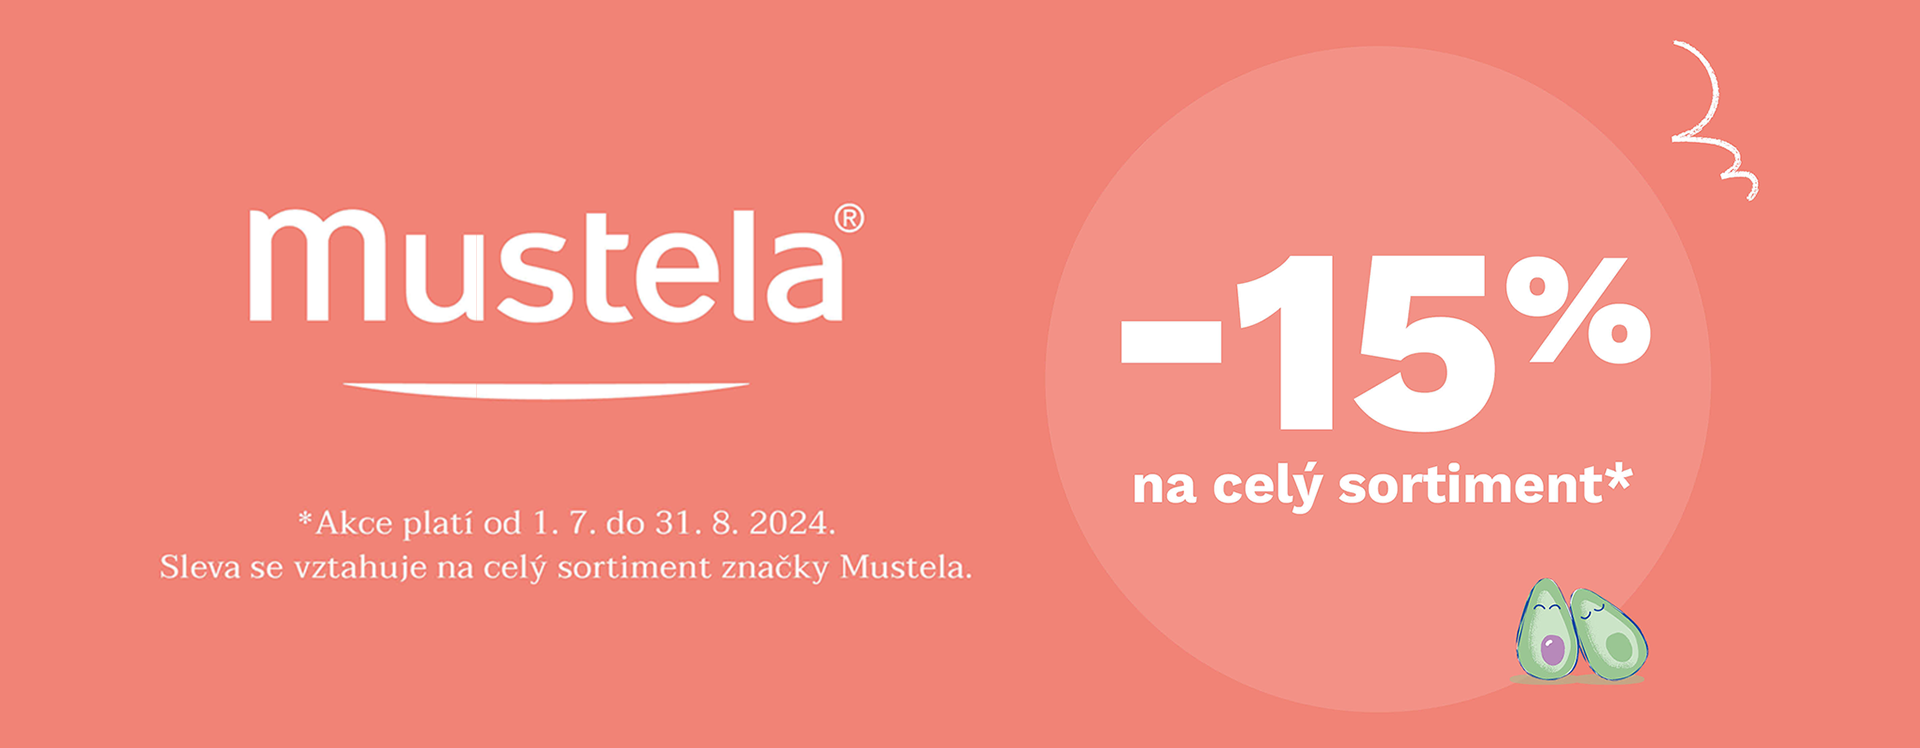 Onlinelekarna.cz | Mustela v akci